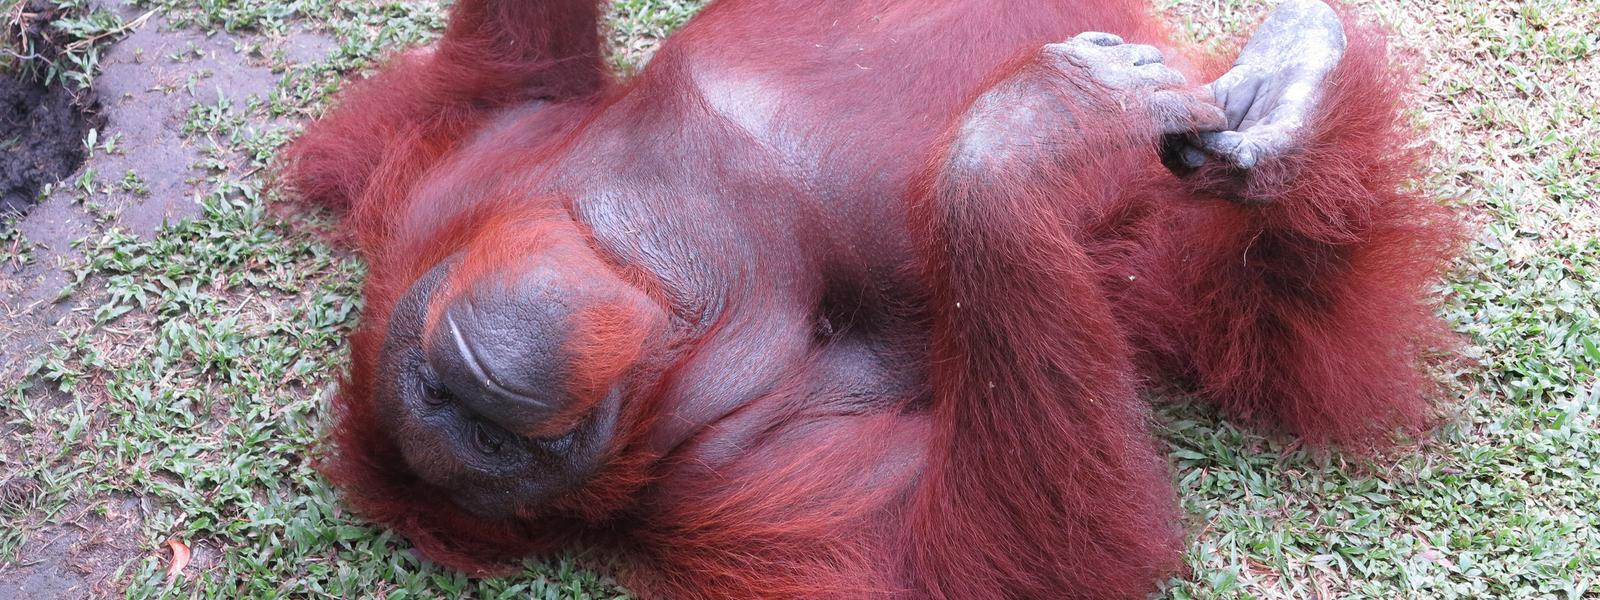 Orangutan in kalimantan